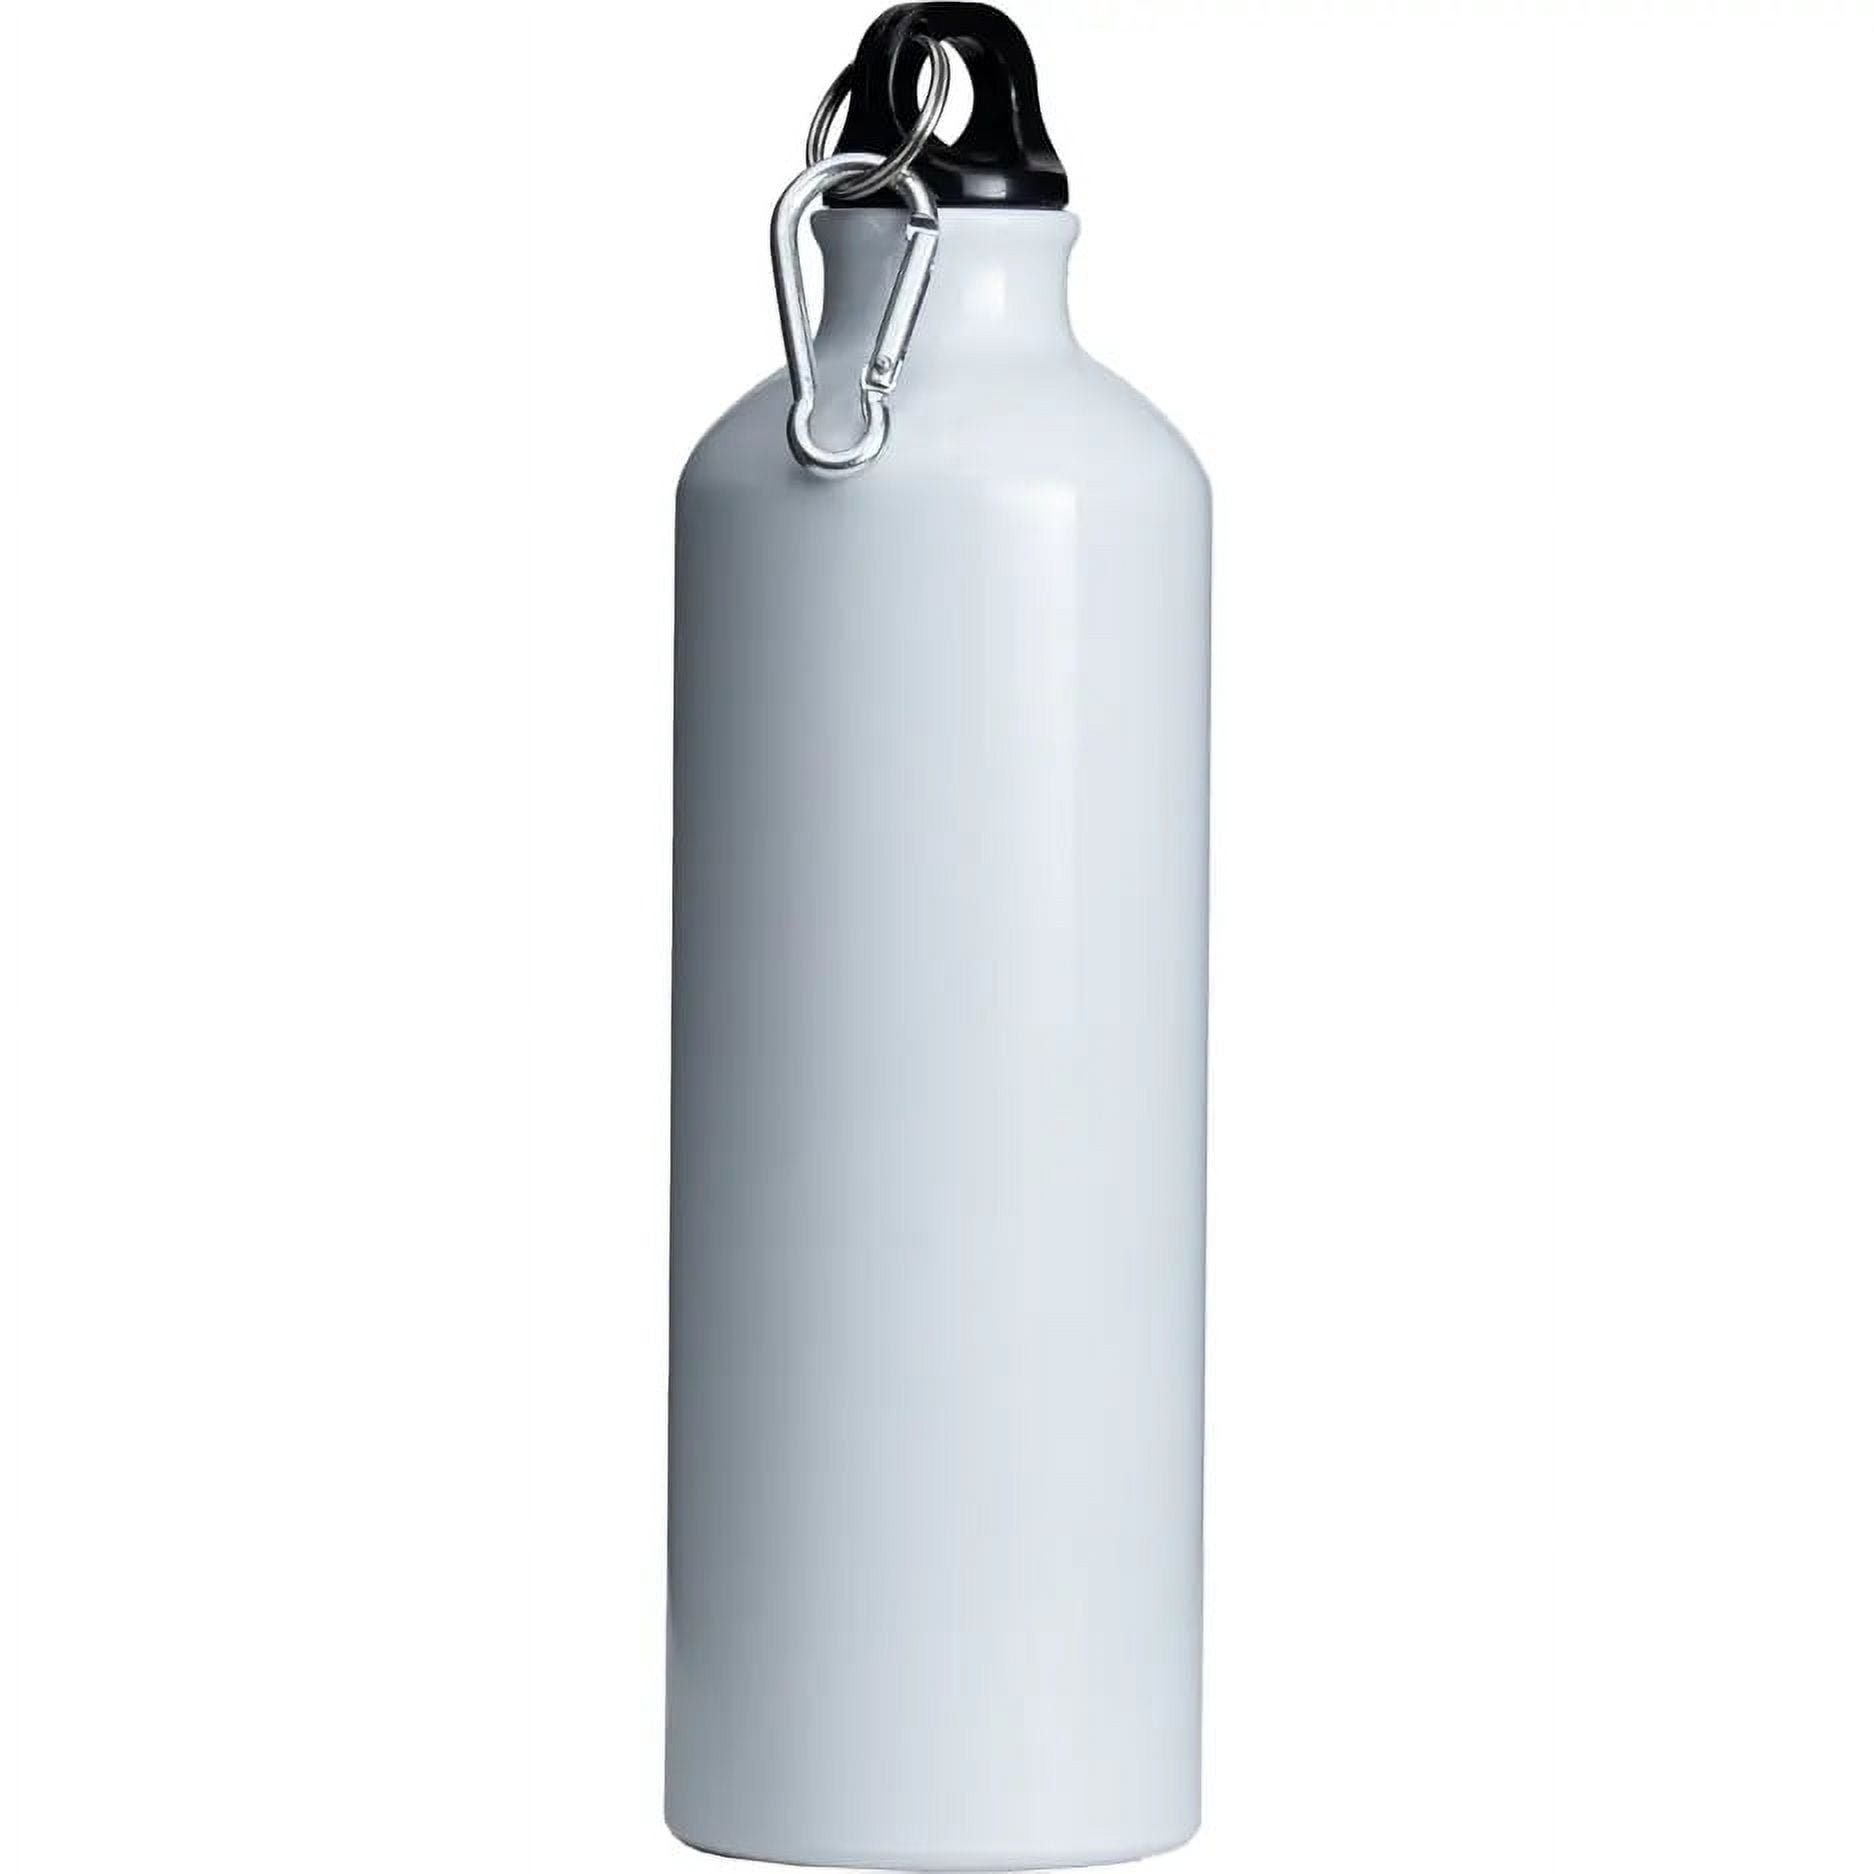 The Perle Aluminum Water Bottle